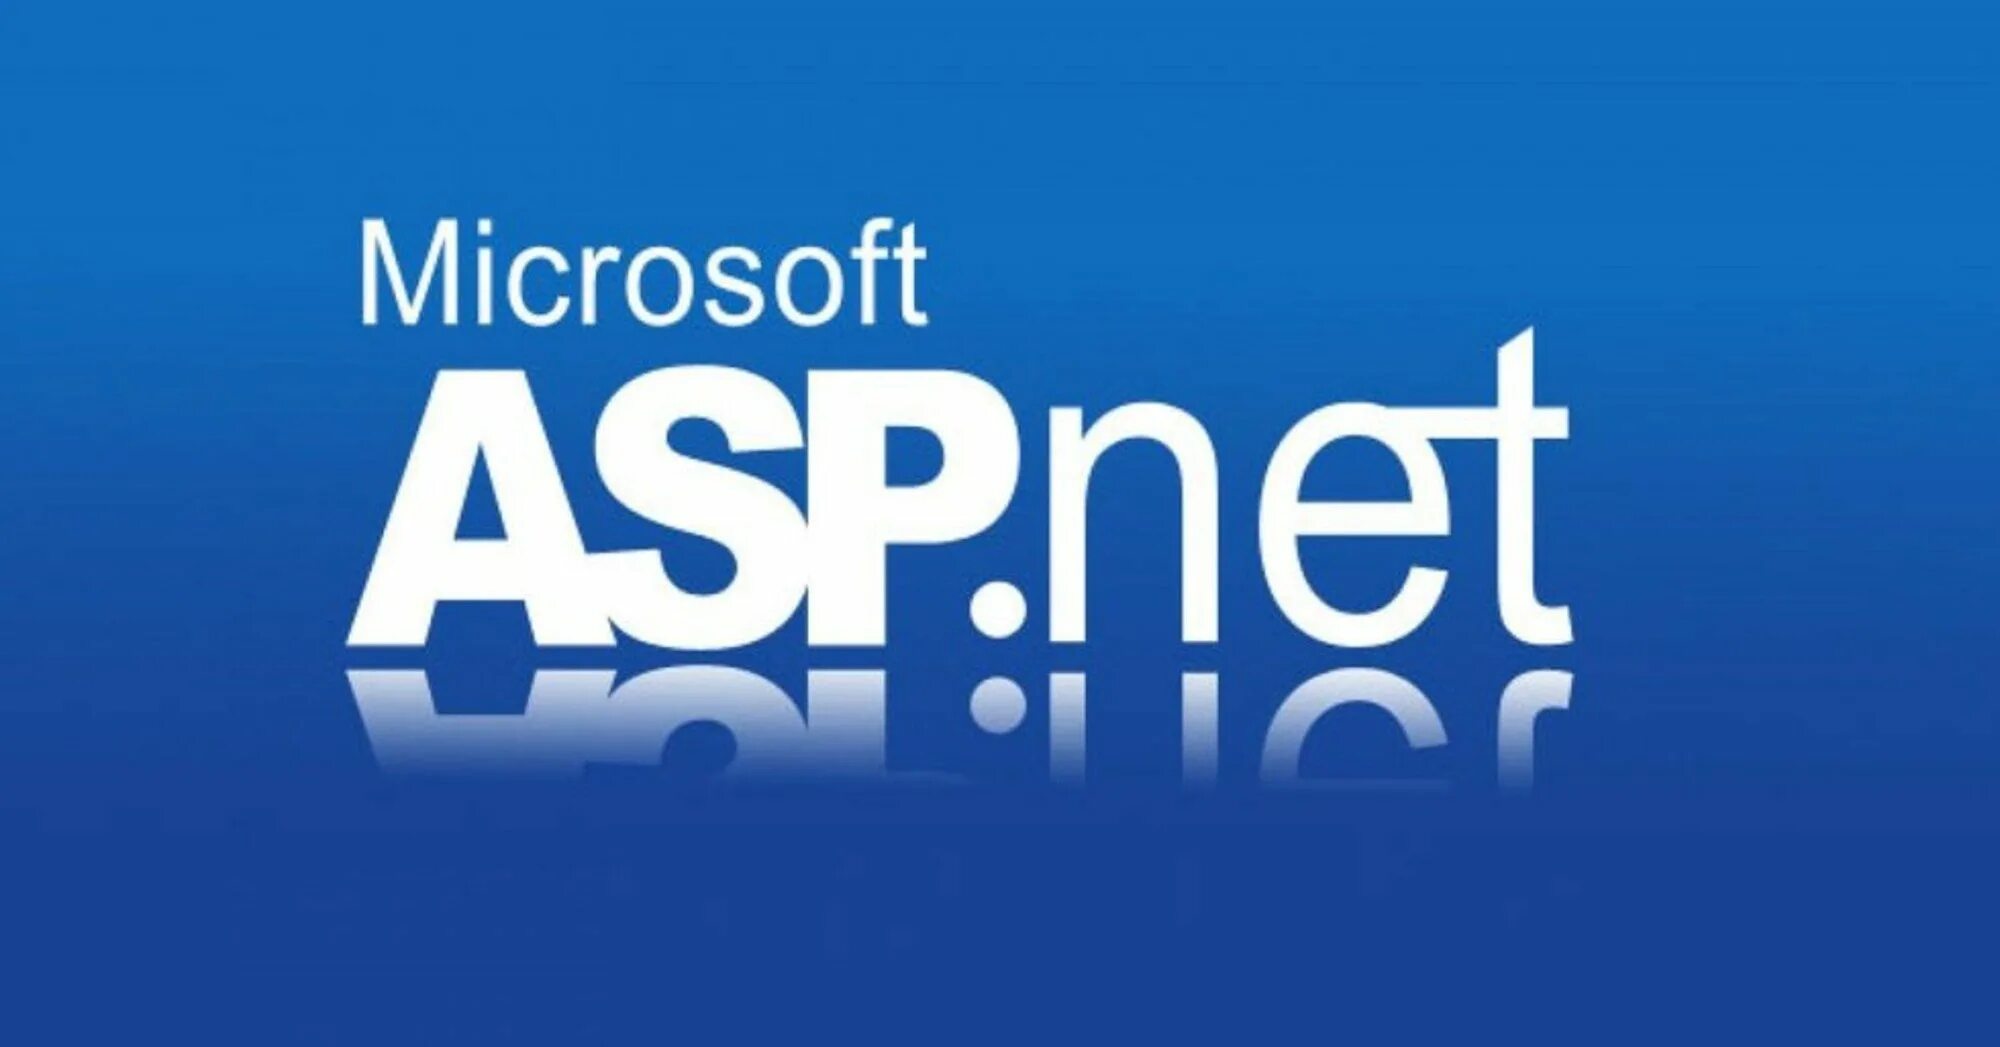 Asp net https. Asp net. Microsoft asp. Net. Баннер Microsoft. Asp.net логотип.